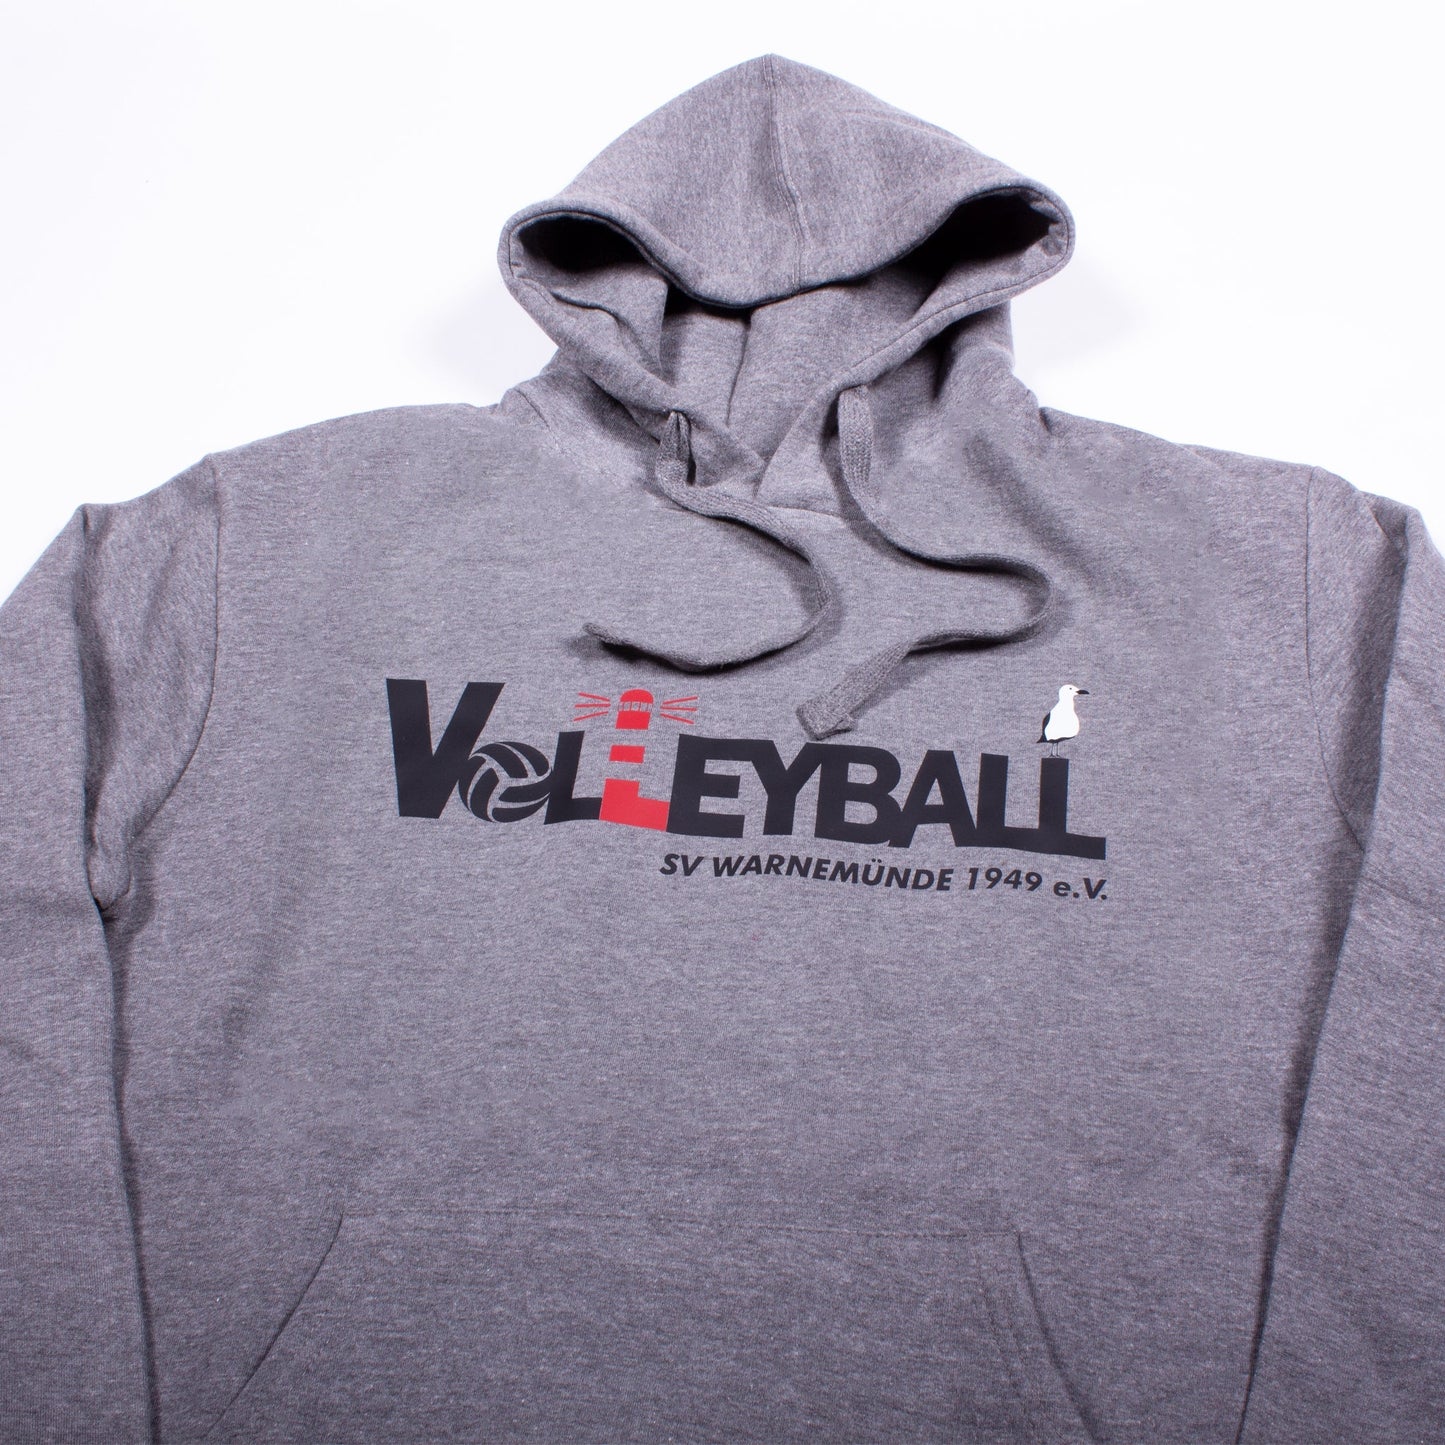 SVW Hoodie - Volleyball (Möwe)